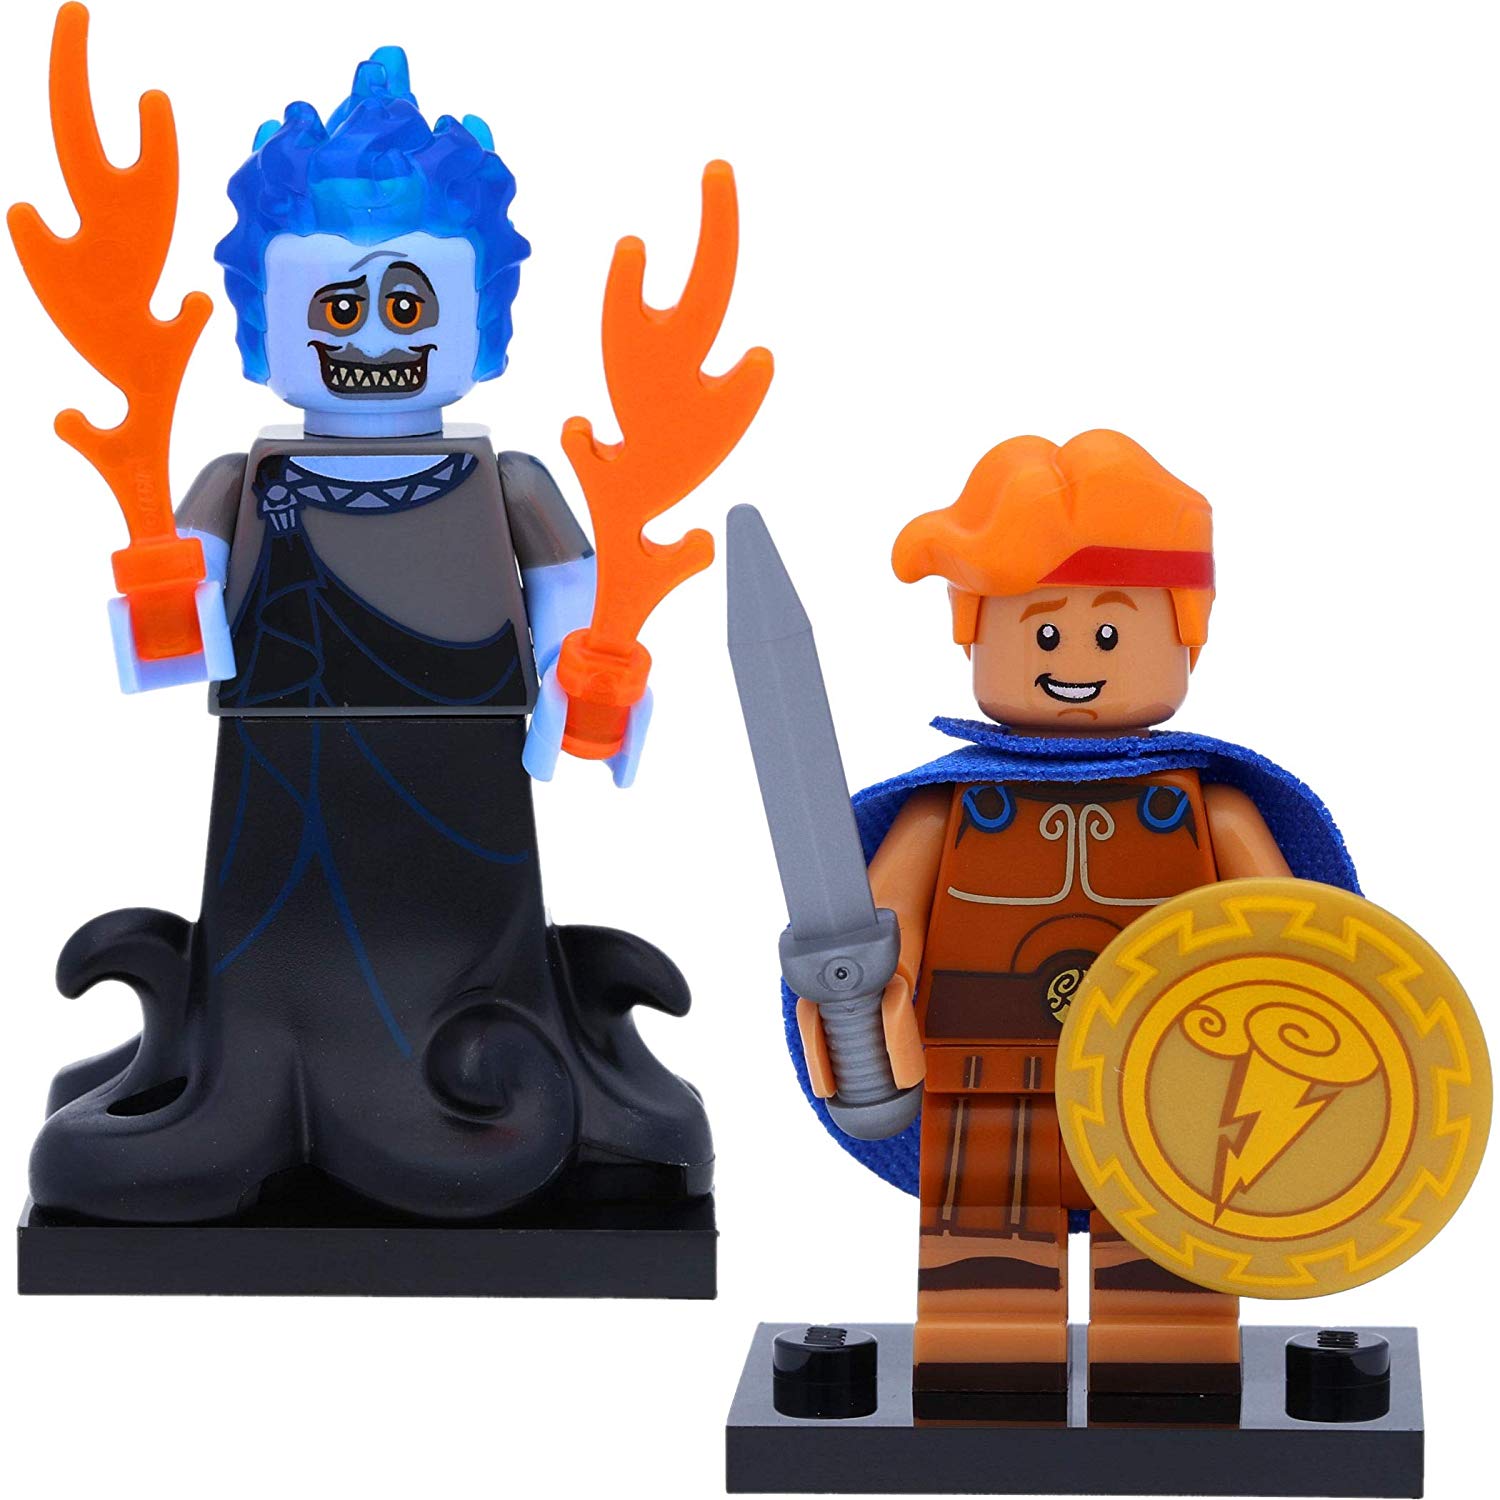 Lego 71024 Disney Series 2 Minifigures: #13 Hades And #14 Hercules